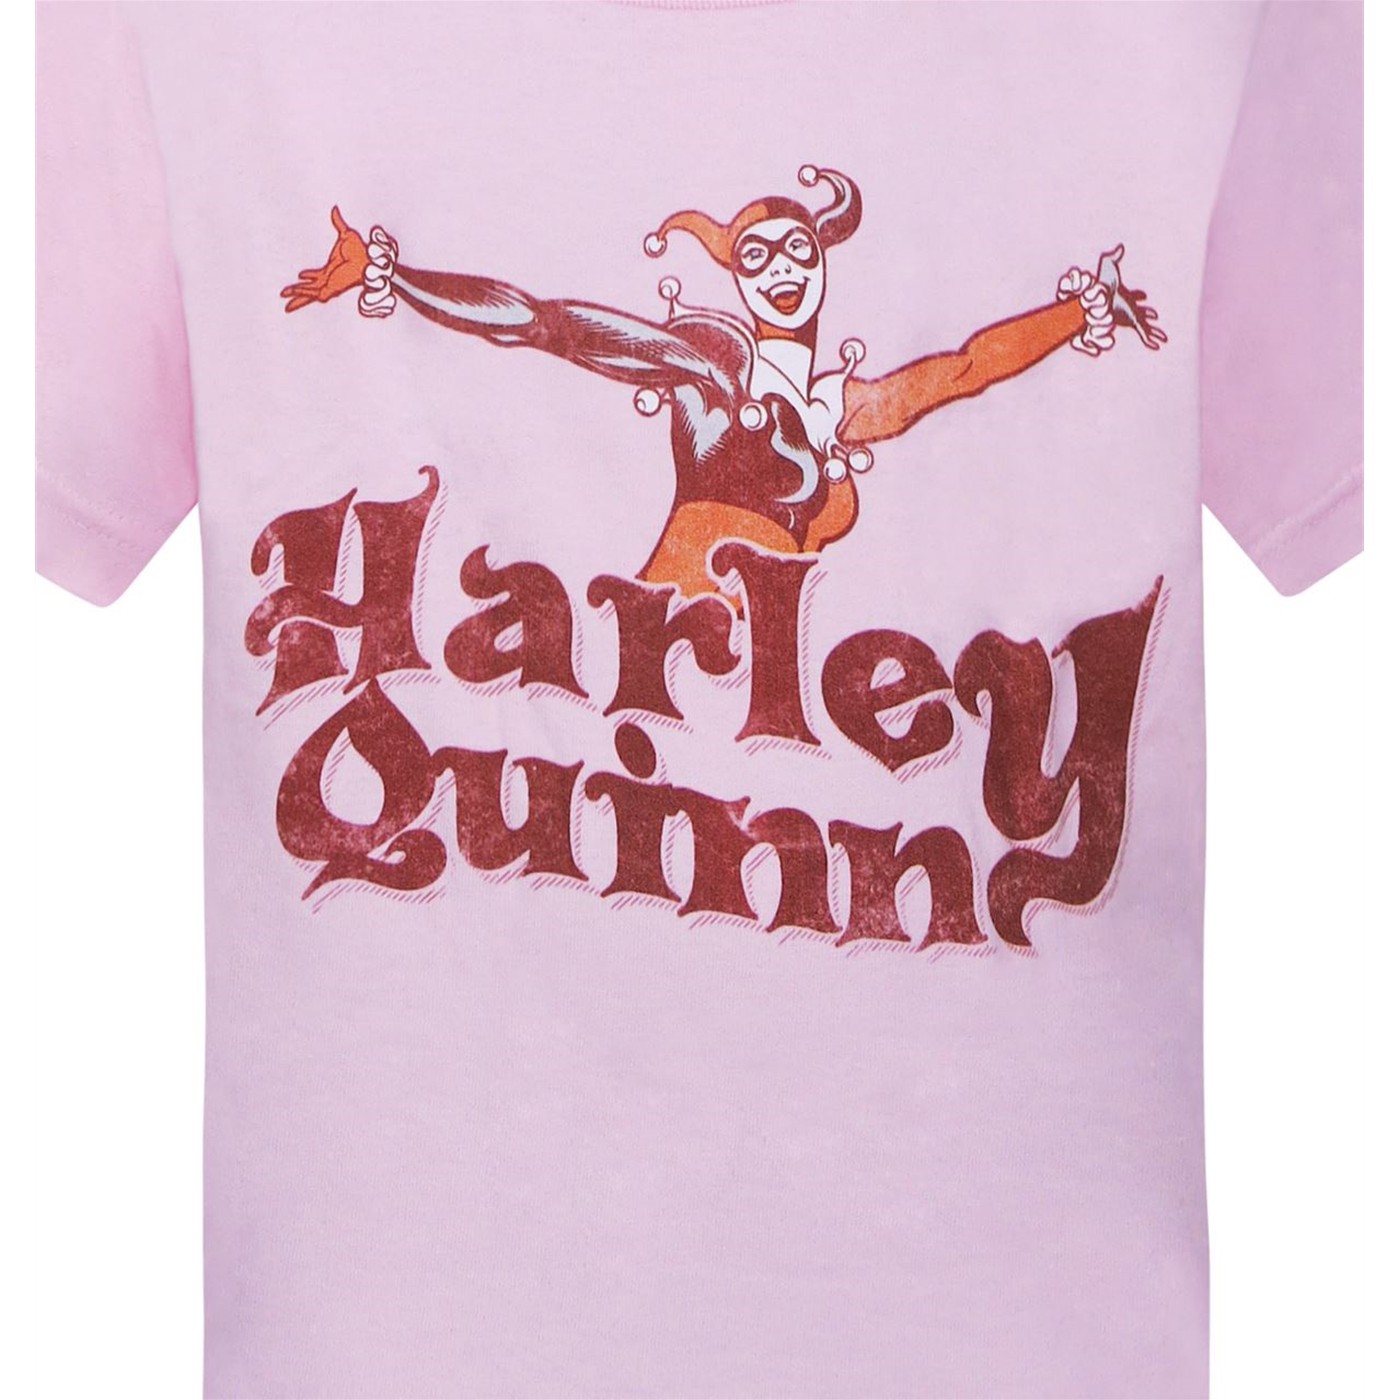 Harley Quinn Pink Kids T-Shirt